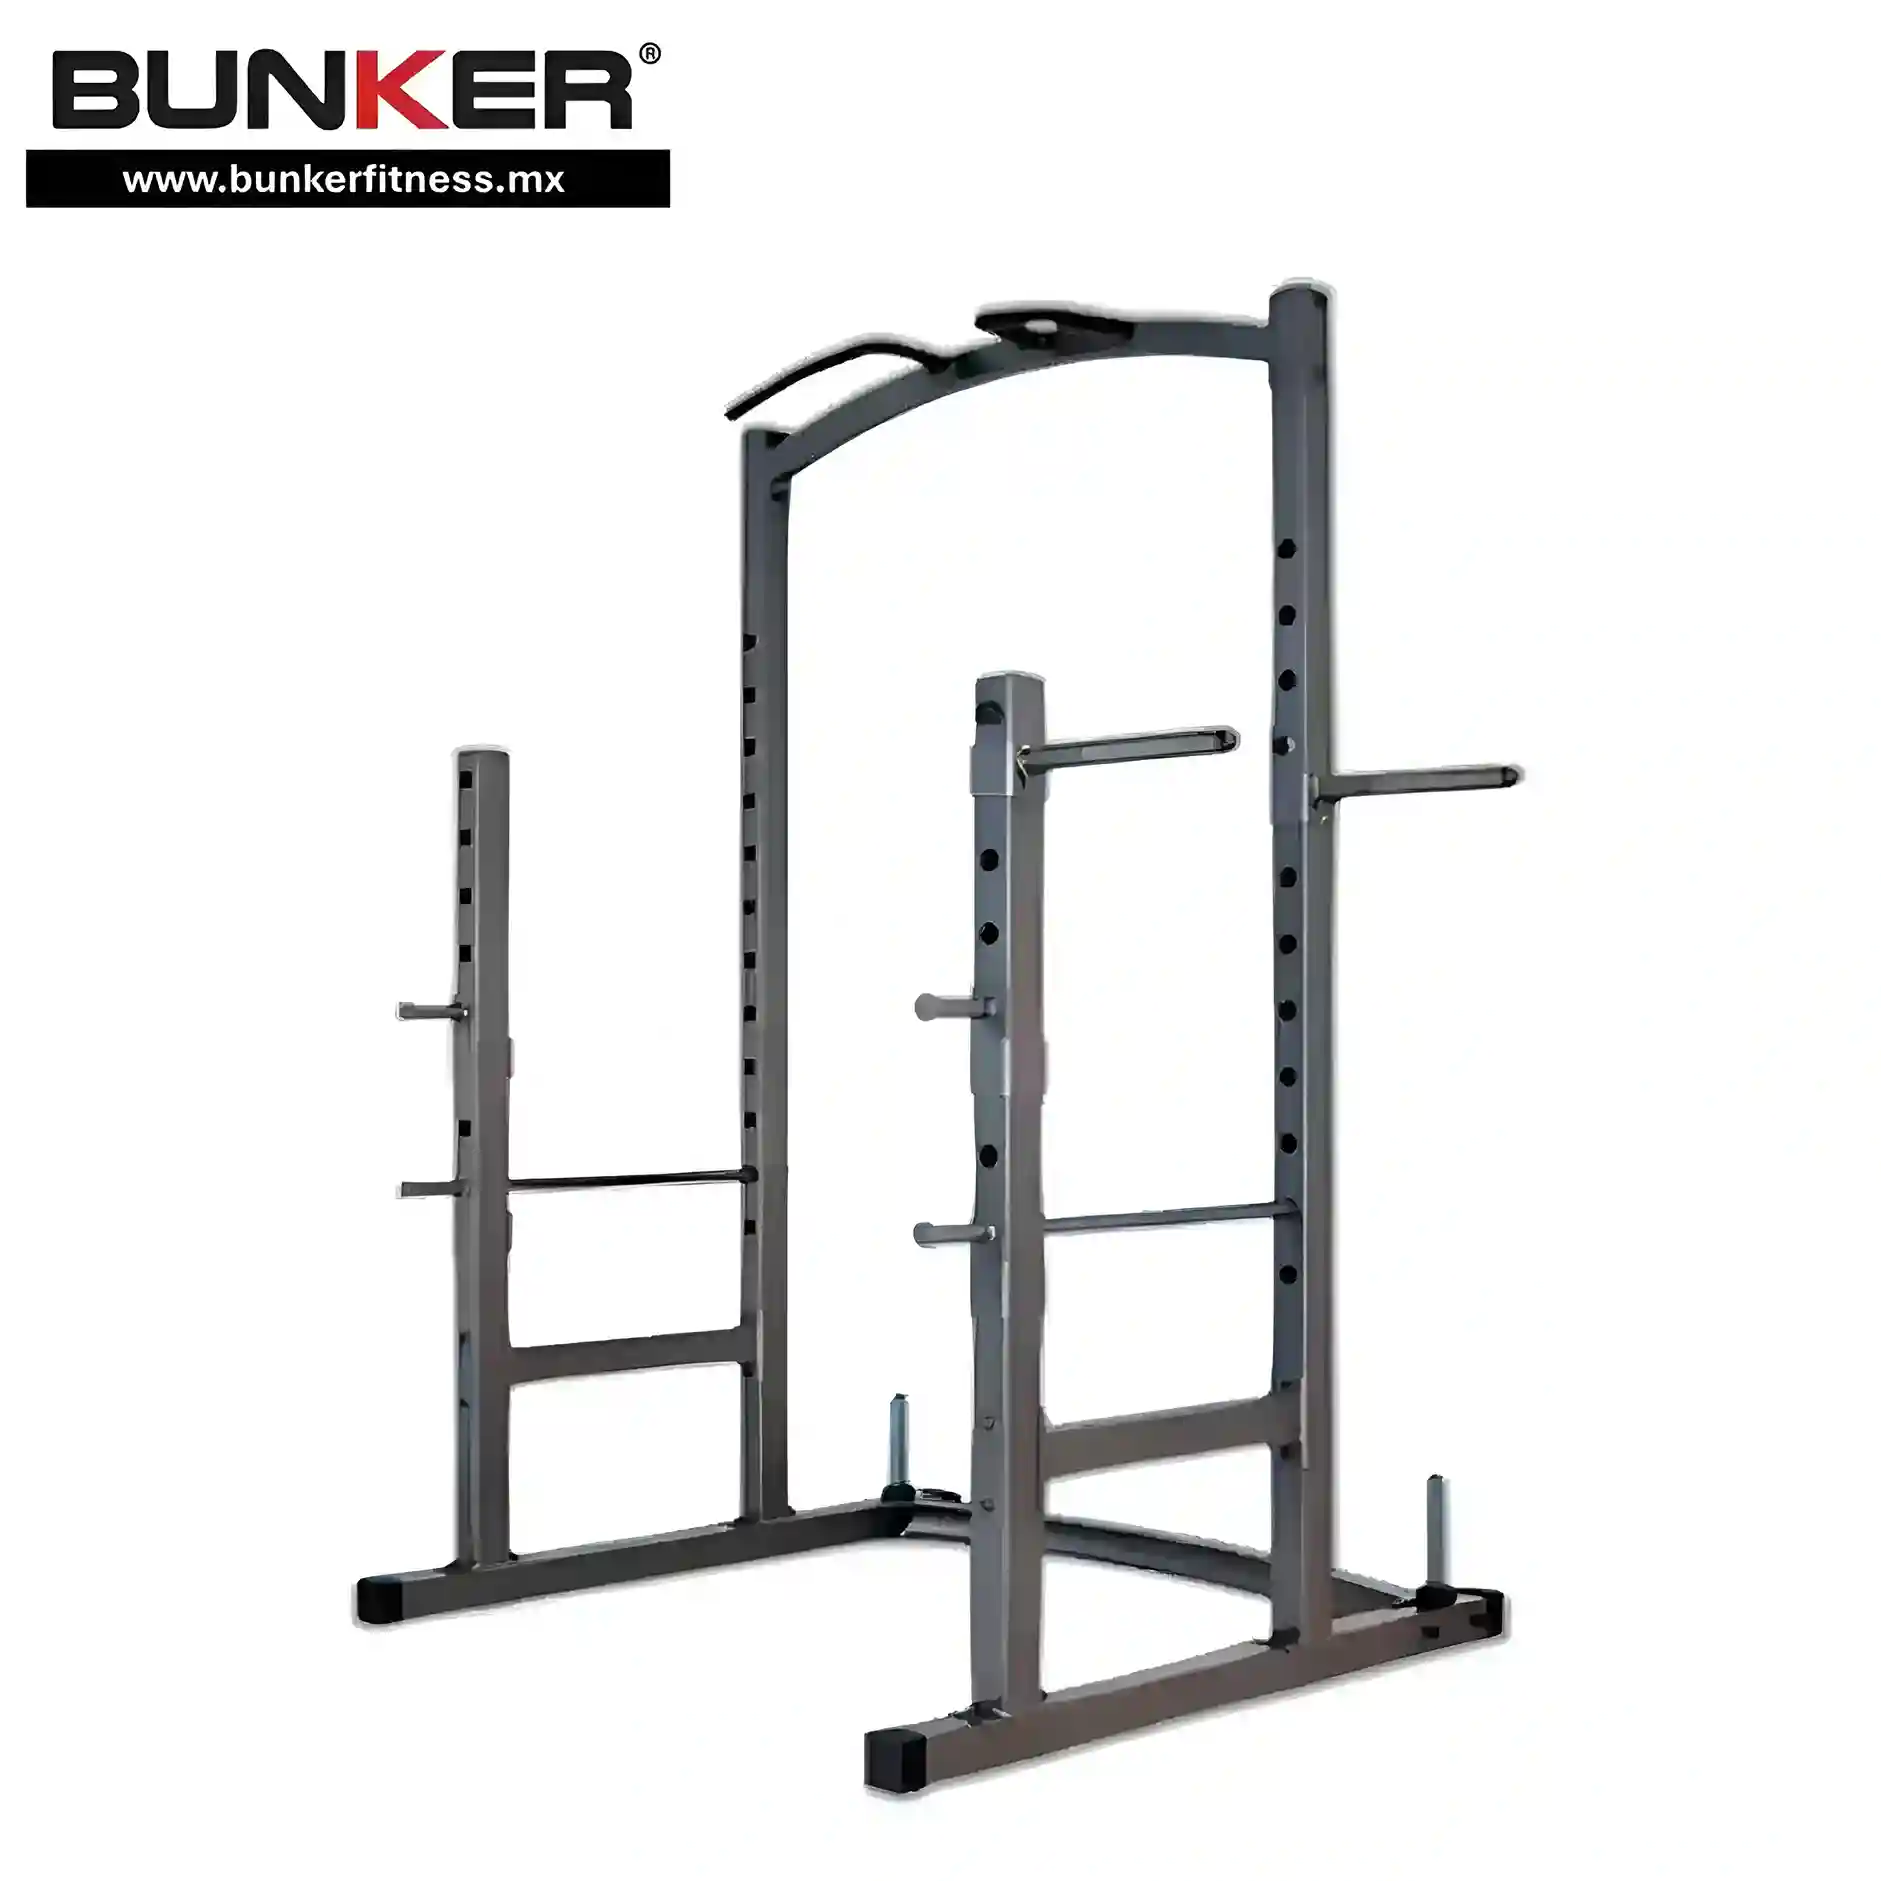 rack squat bunker fitness para ejercicio y gimnasio en casa bunker gym bunker fitness